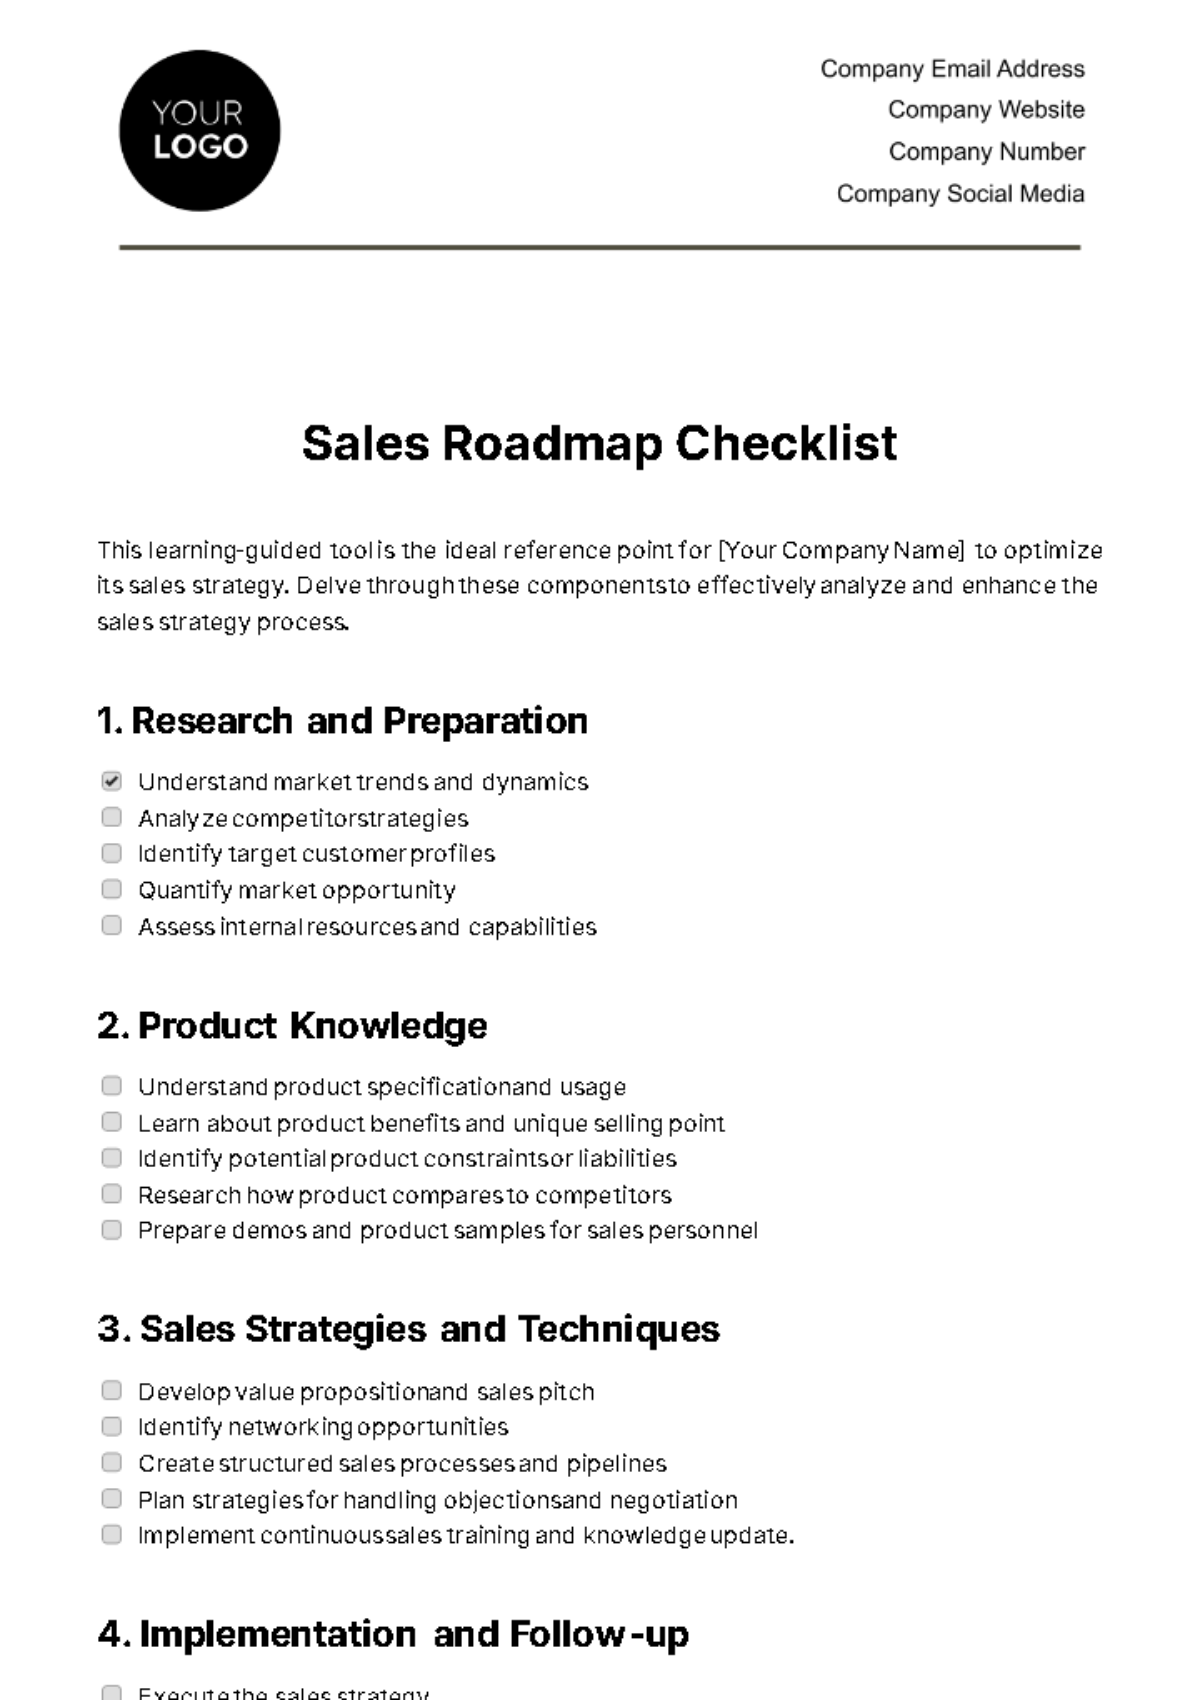 Free Sales Roadmap Checklist Template